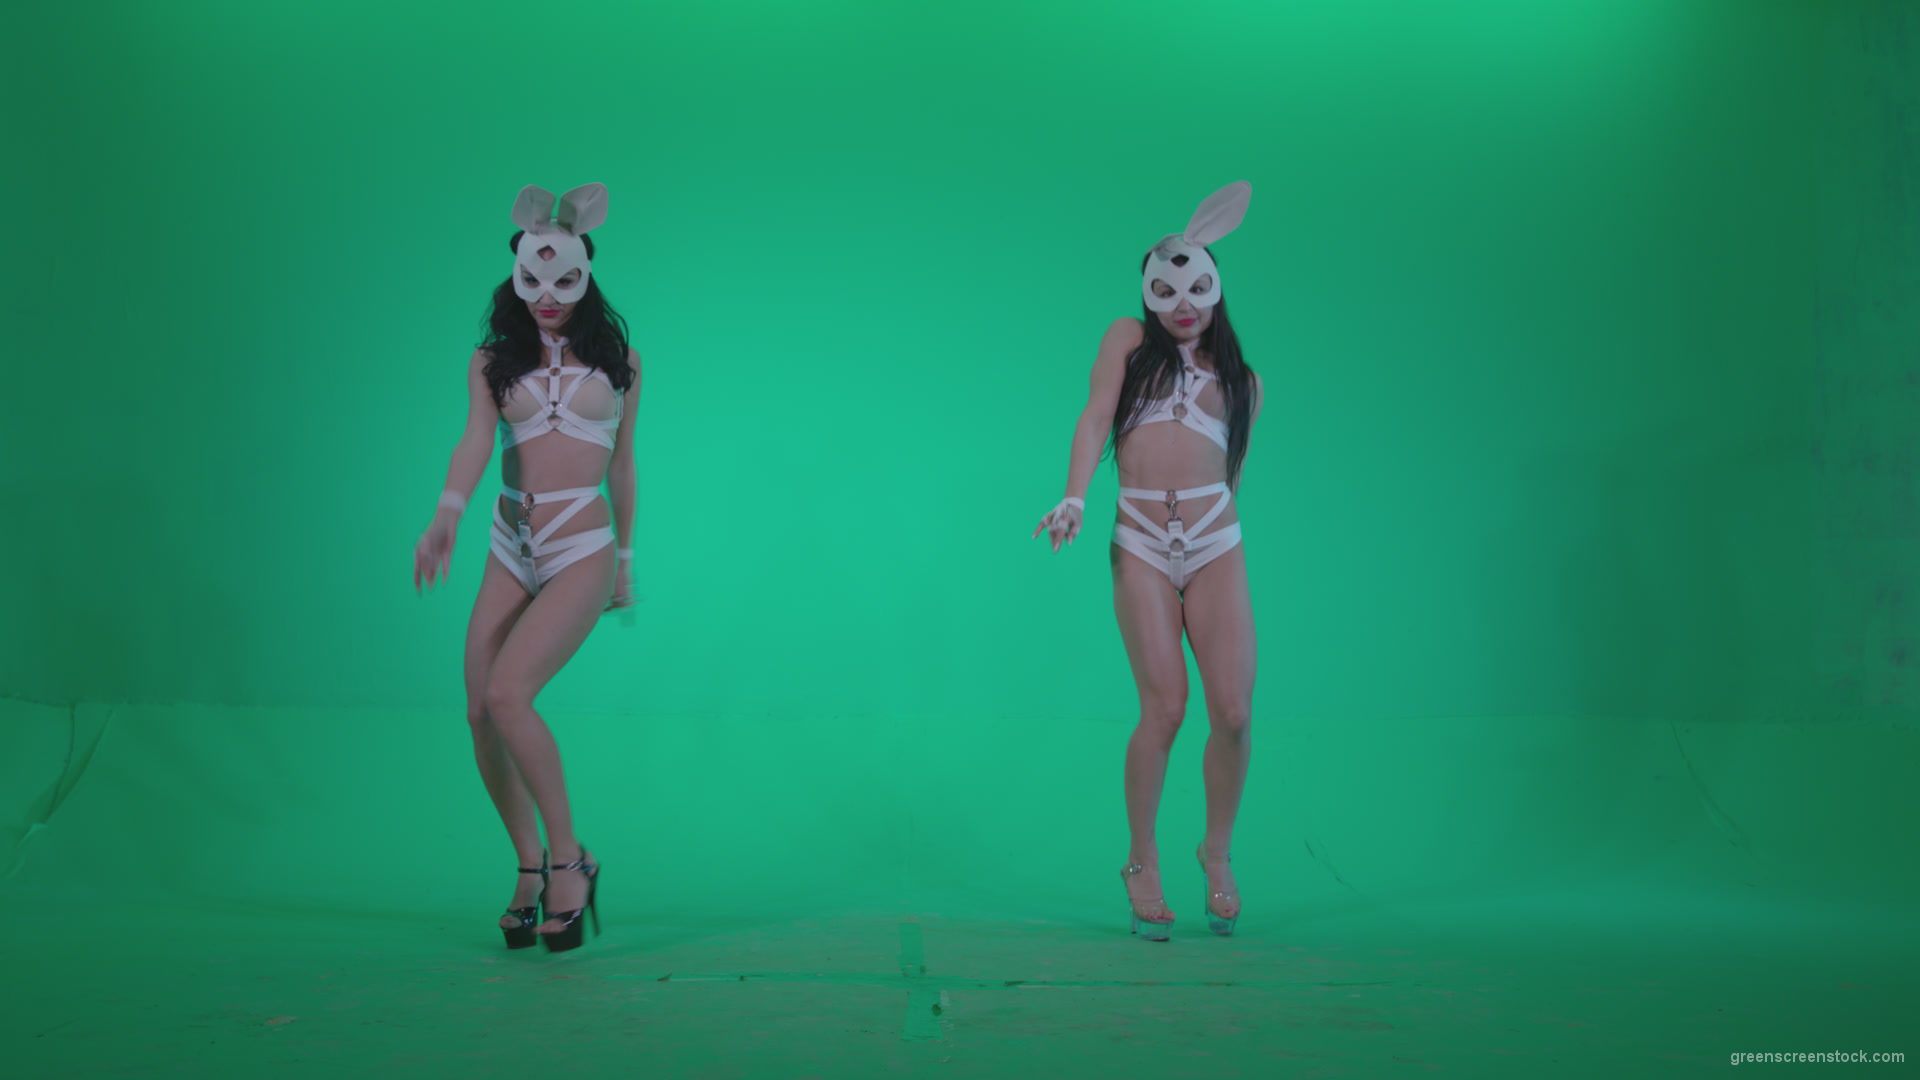 Go-go-Dancer-White-Rabbit-m1-Green-Screen-Video-Footage_002 Green Screen Stock